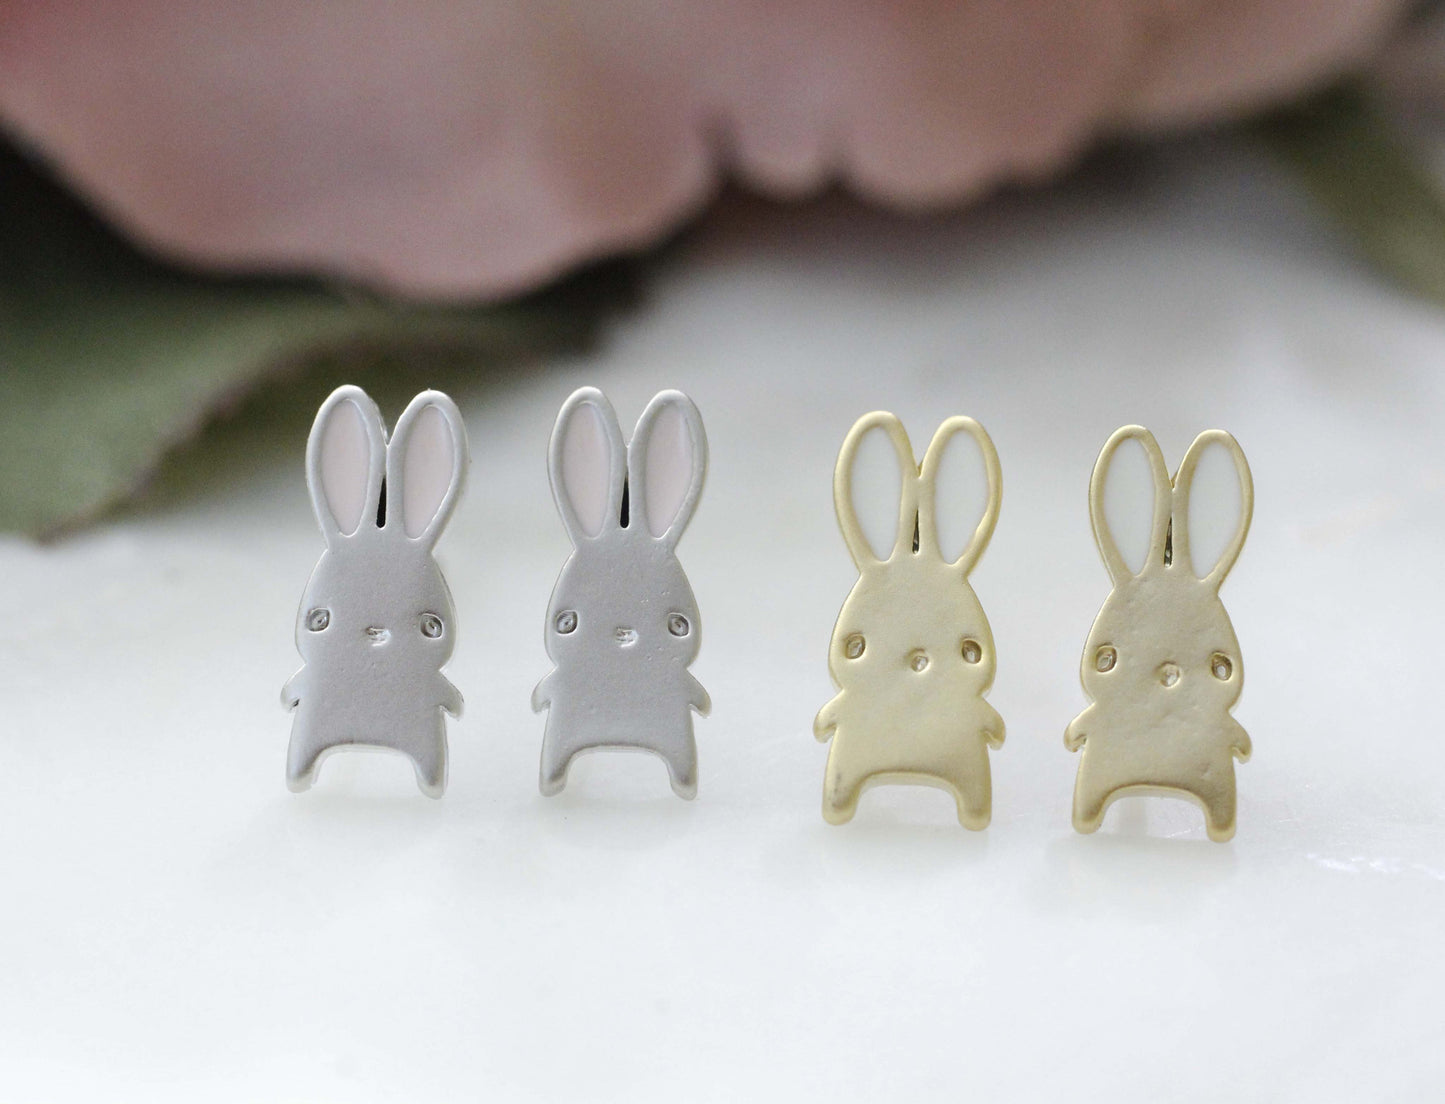 Cute Rabbit stud earrings in 2 colors